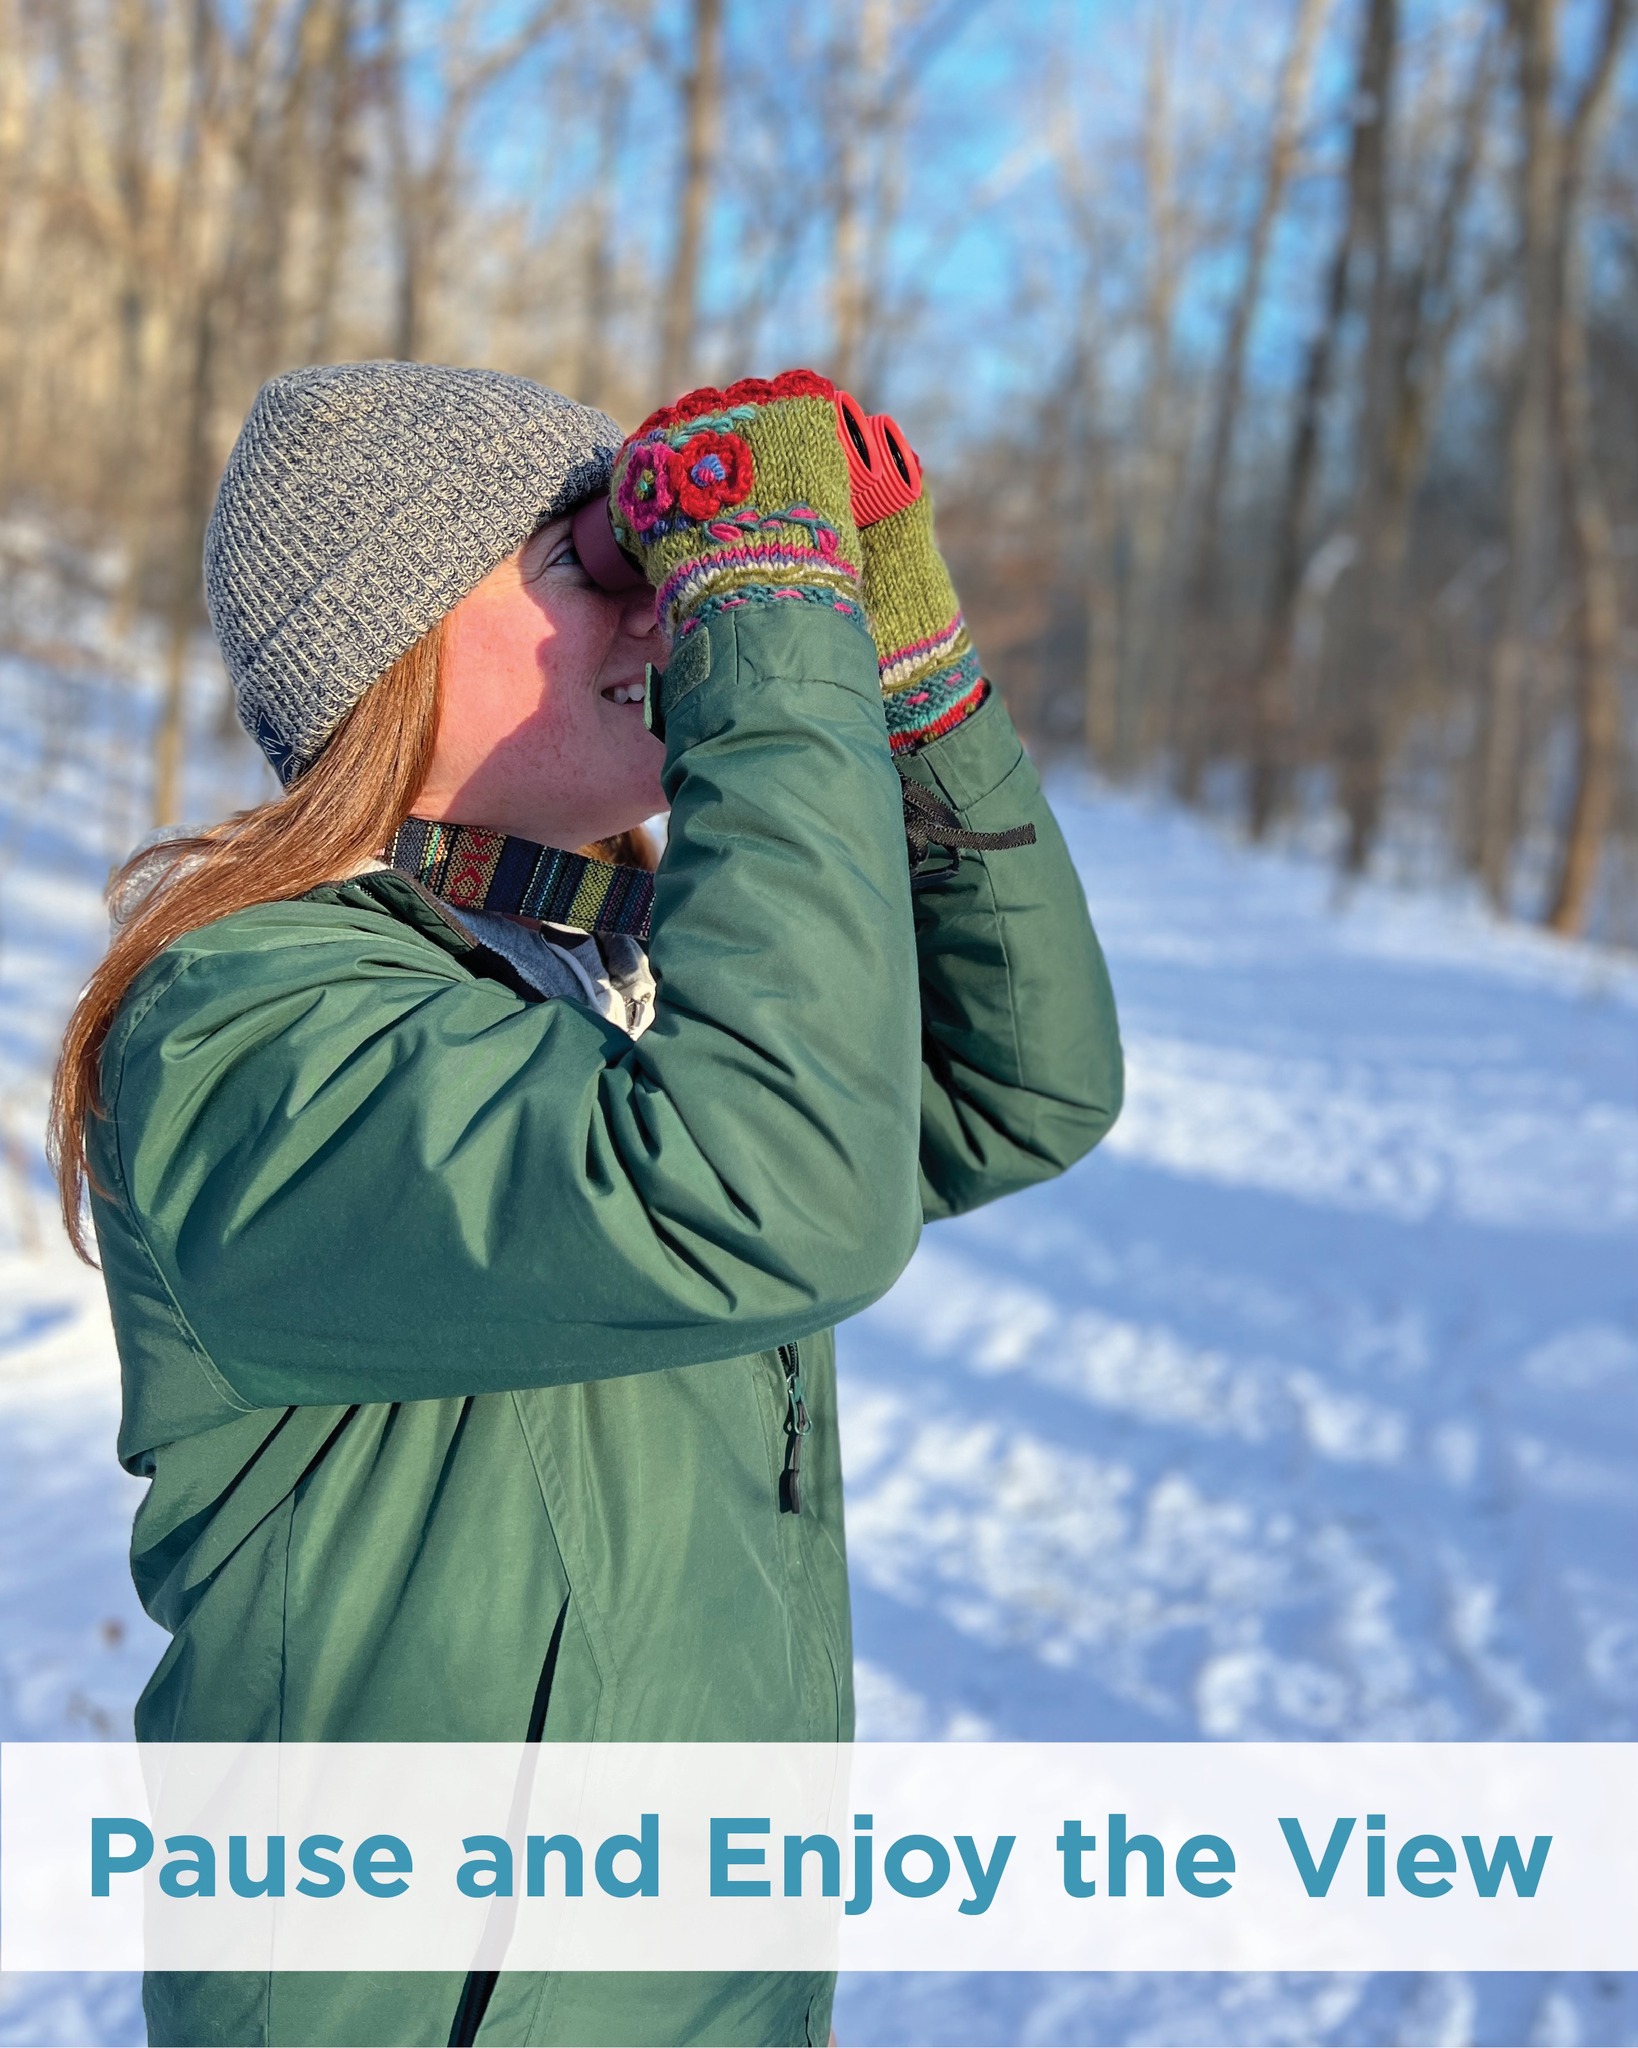 Woman looks through her binoculars in the snow.